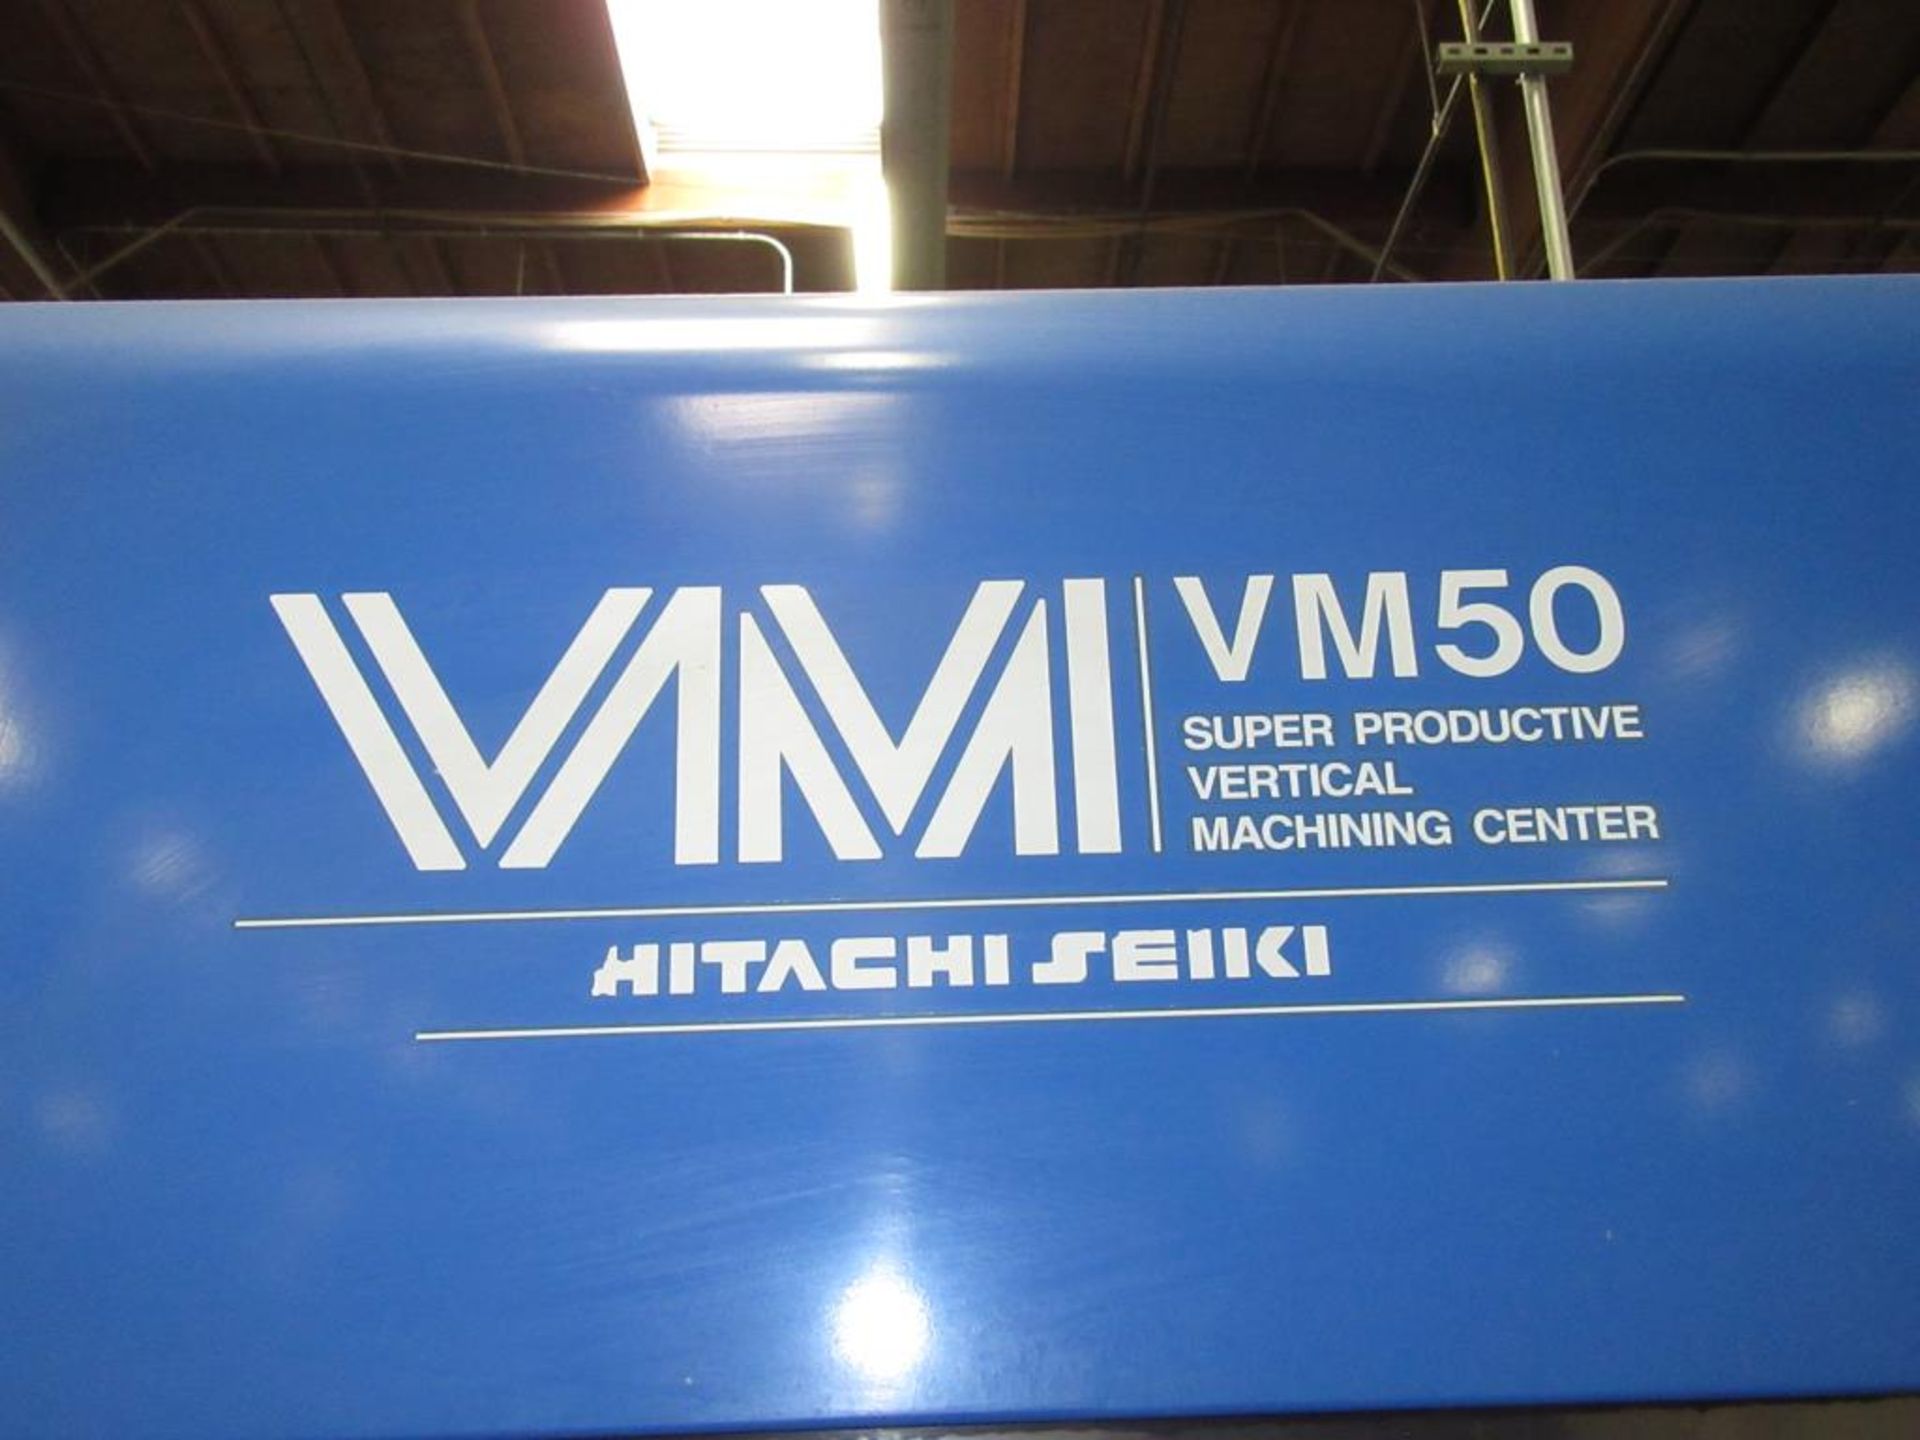 Hitachi Seiki VM-50. 1997 - CNC Vertical Machining Center with Seicos Lambda 10M 3-Axis Control - Image 8 of 15